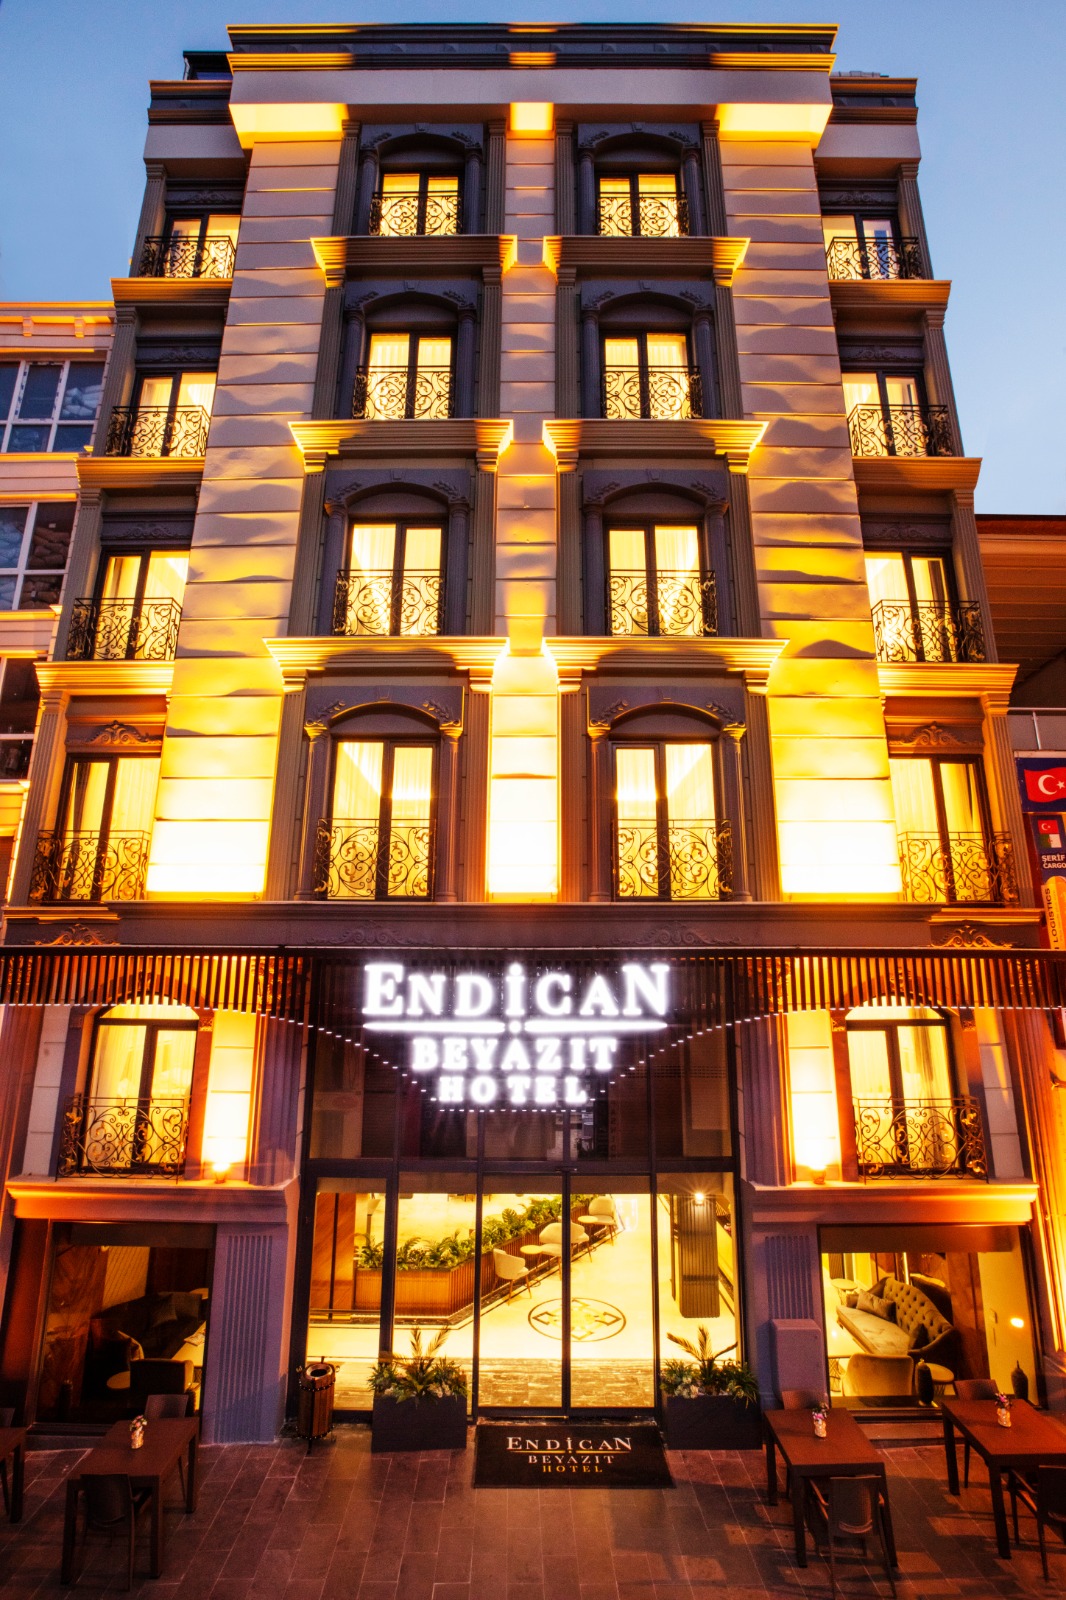 Endican Hotels